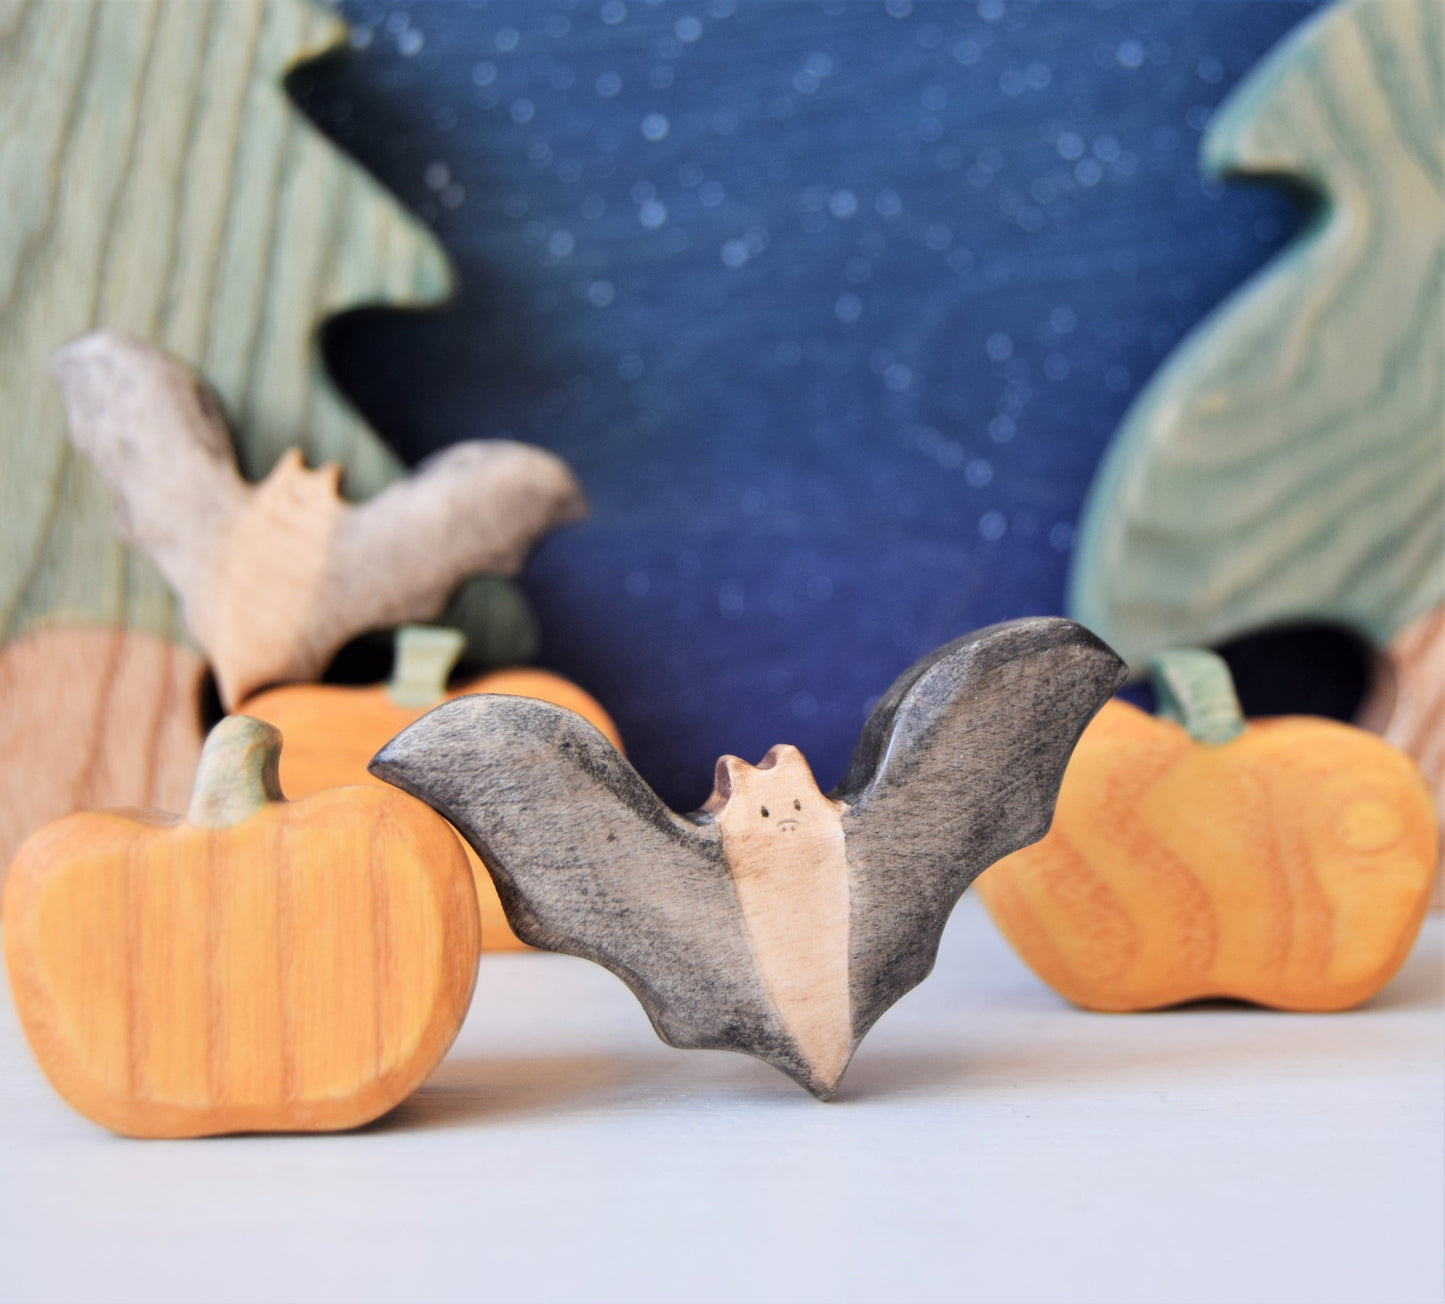 Wooden Bat - Eric & Albert